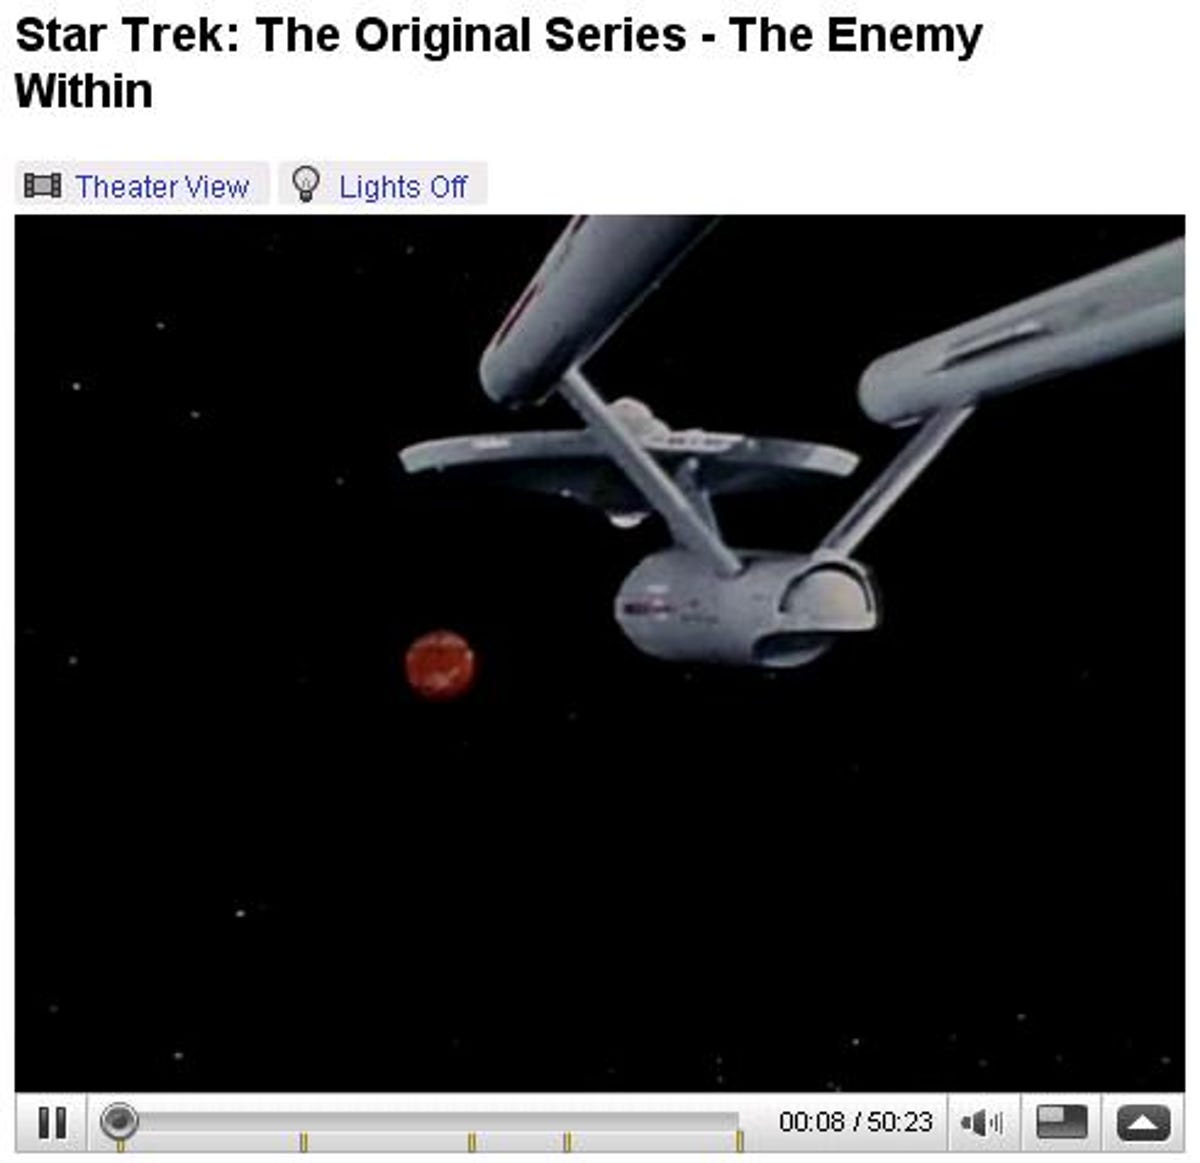 Now showing on YouTube: Star Trek.